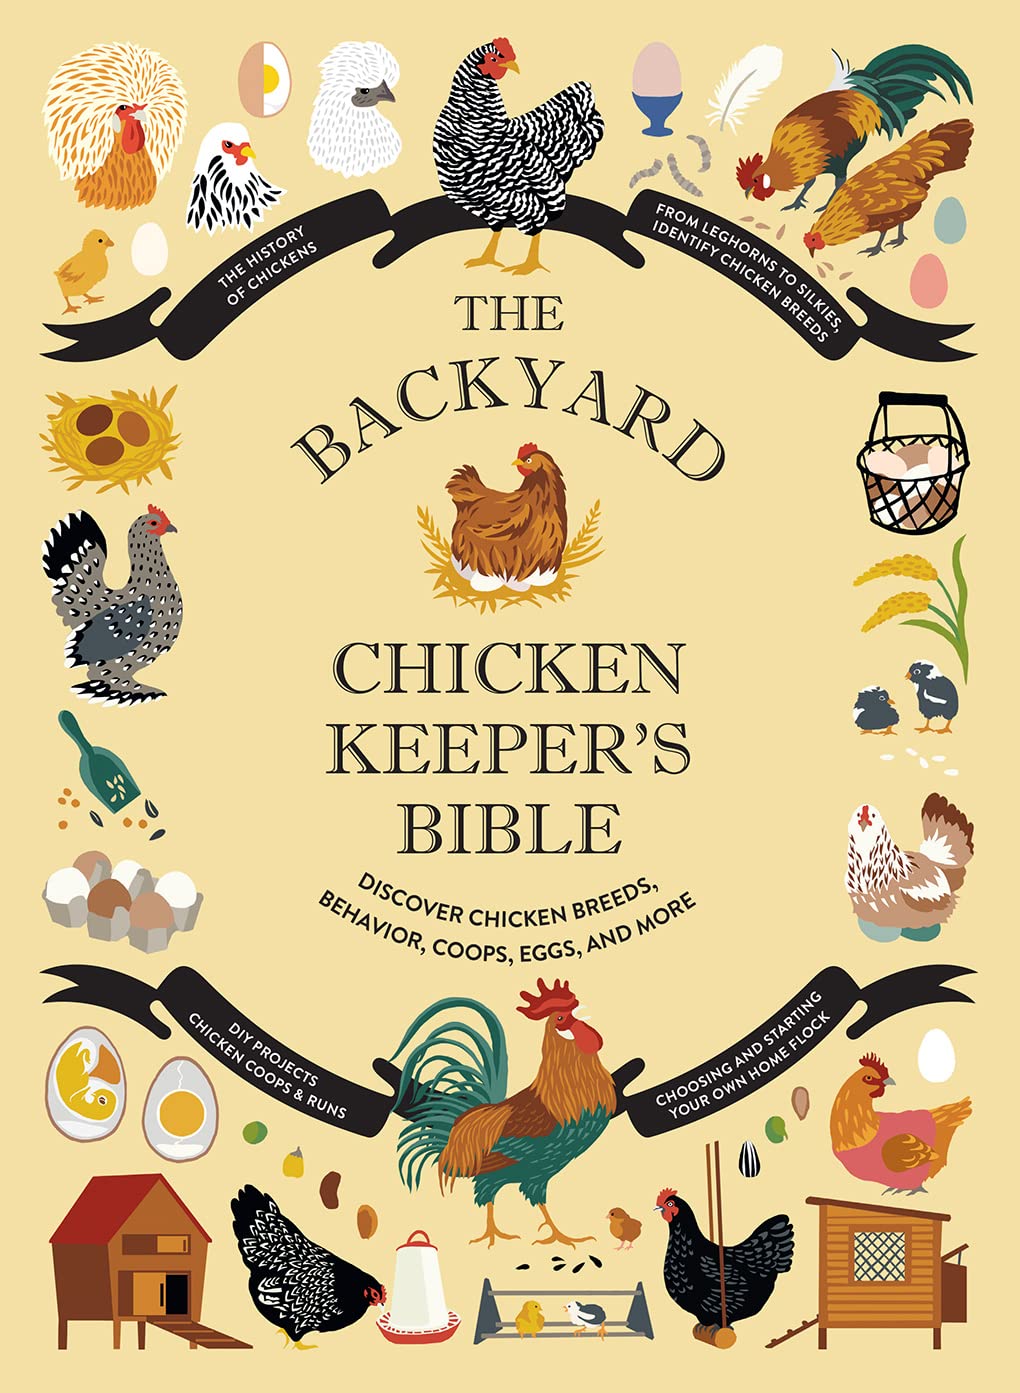 The Backyard Chicken Keeper’s Bible